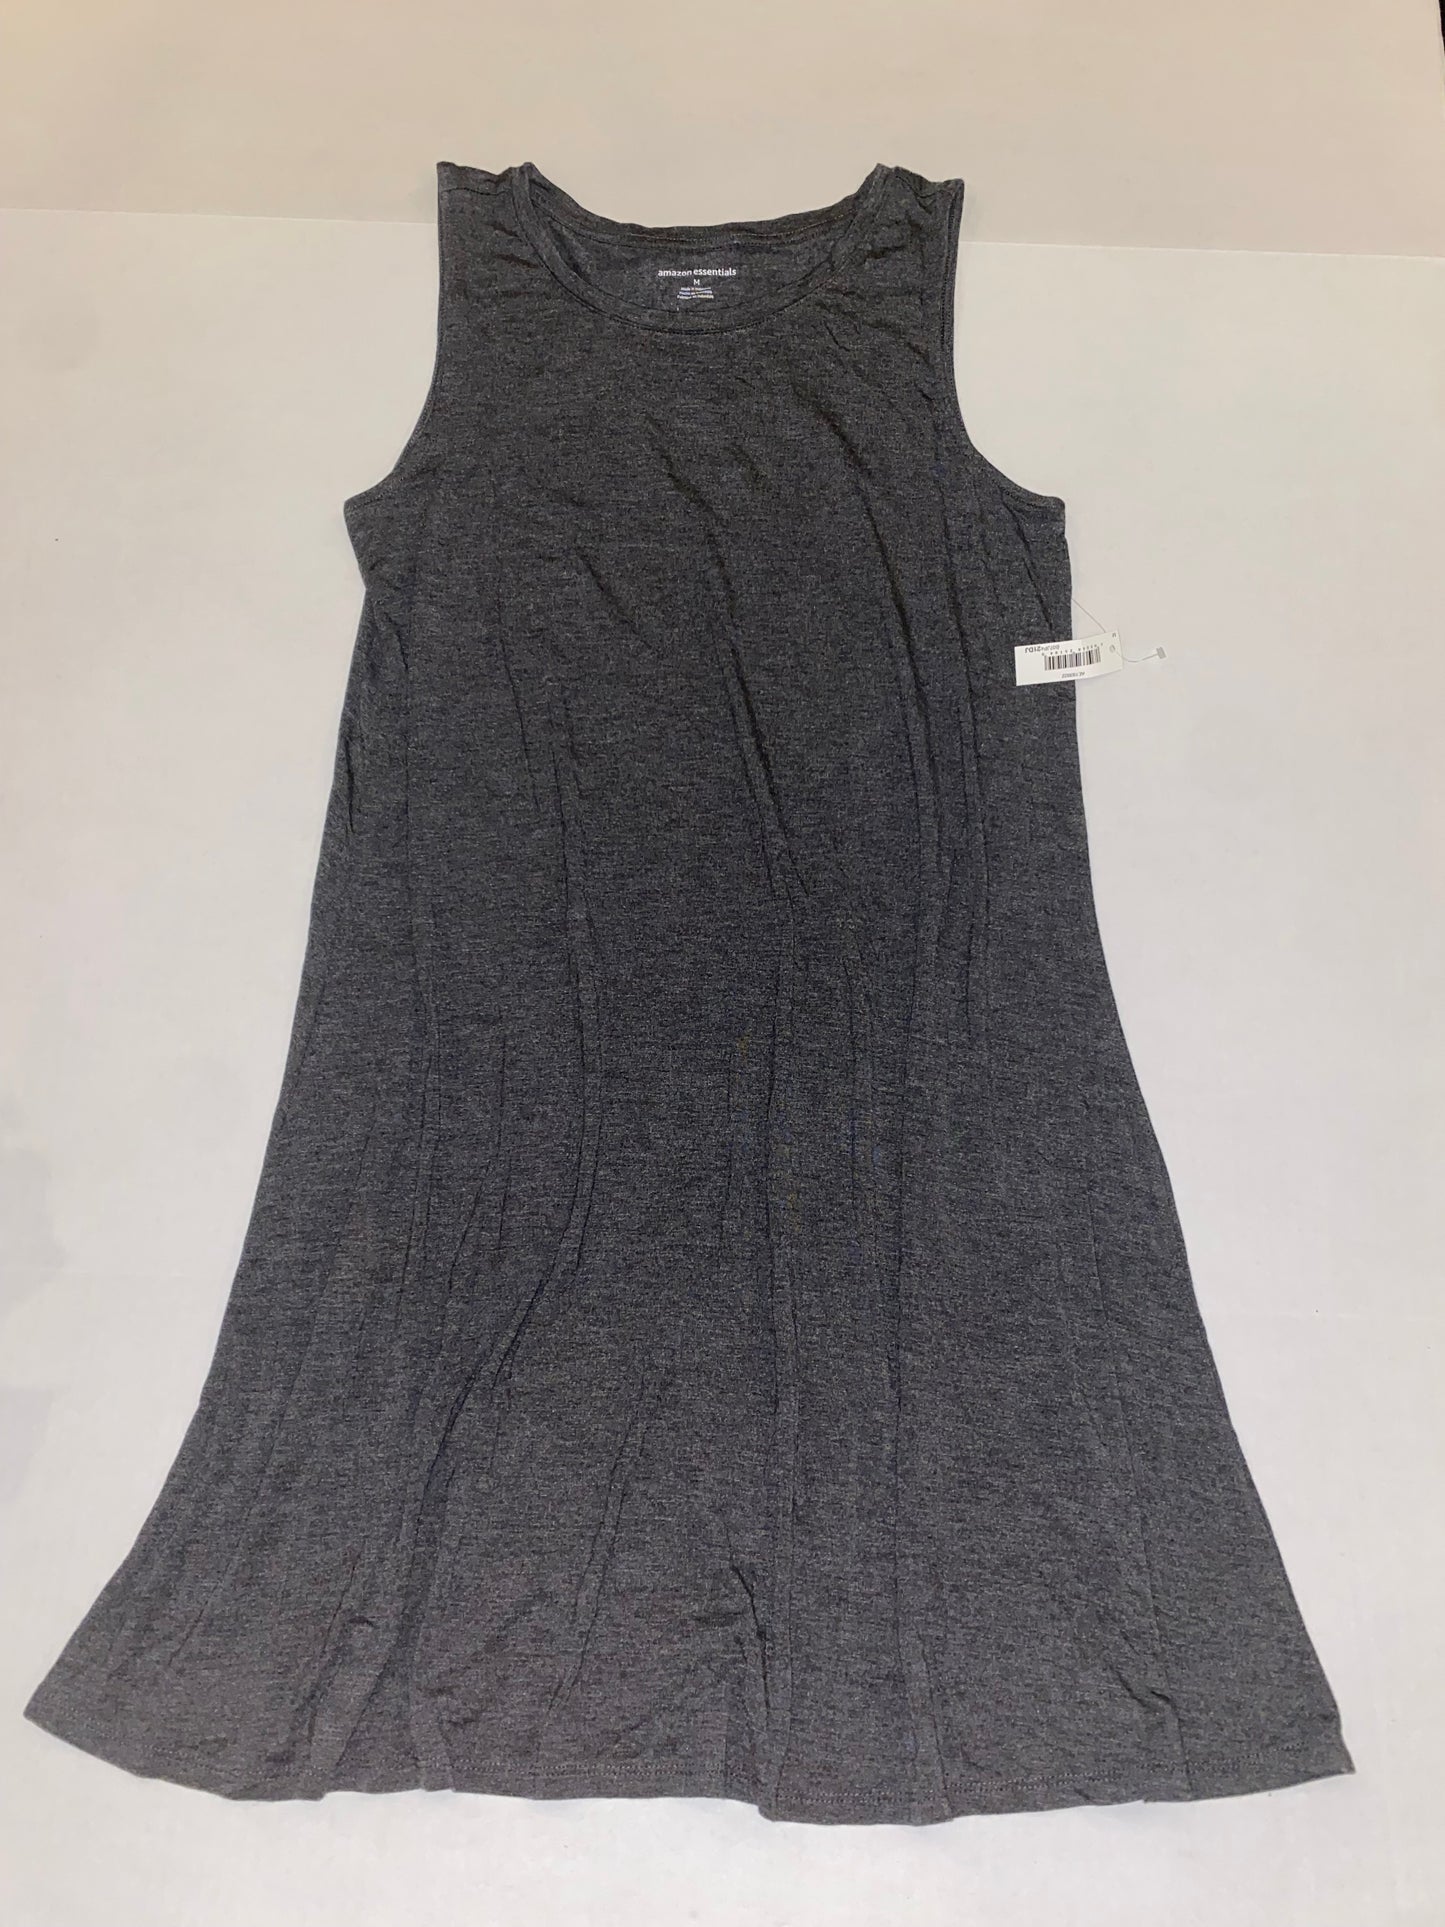 Womens Medium NWT Amazon Essential Grey Sleeveless Dress